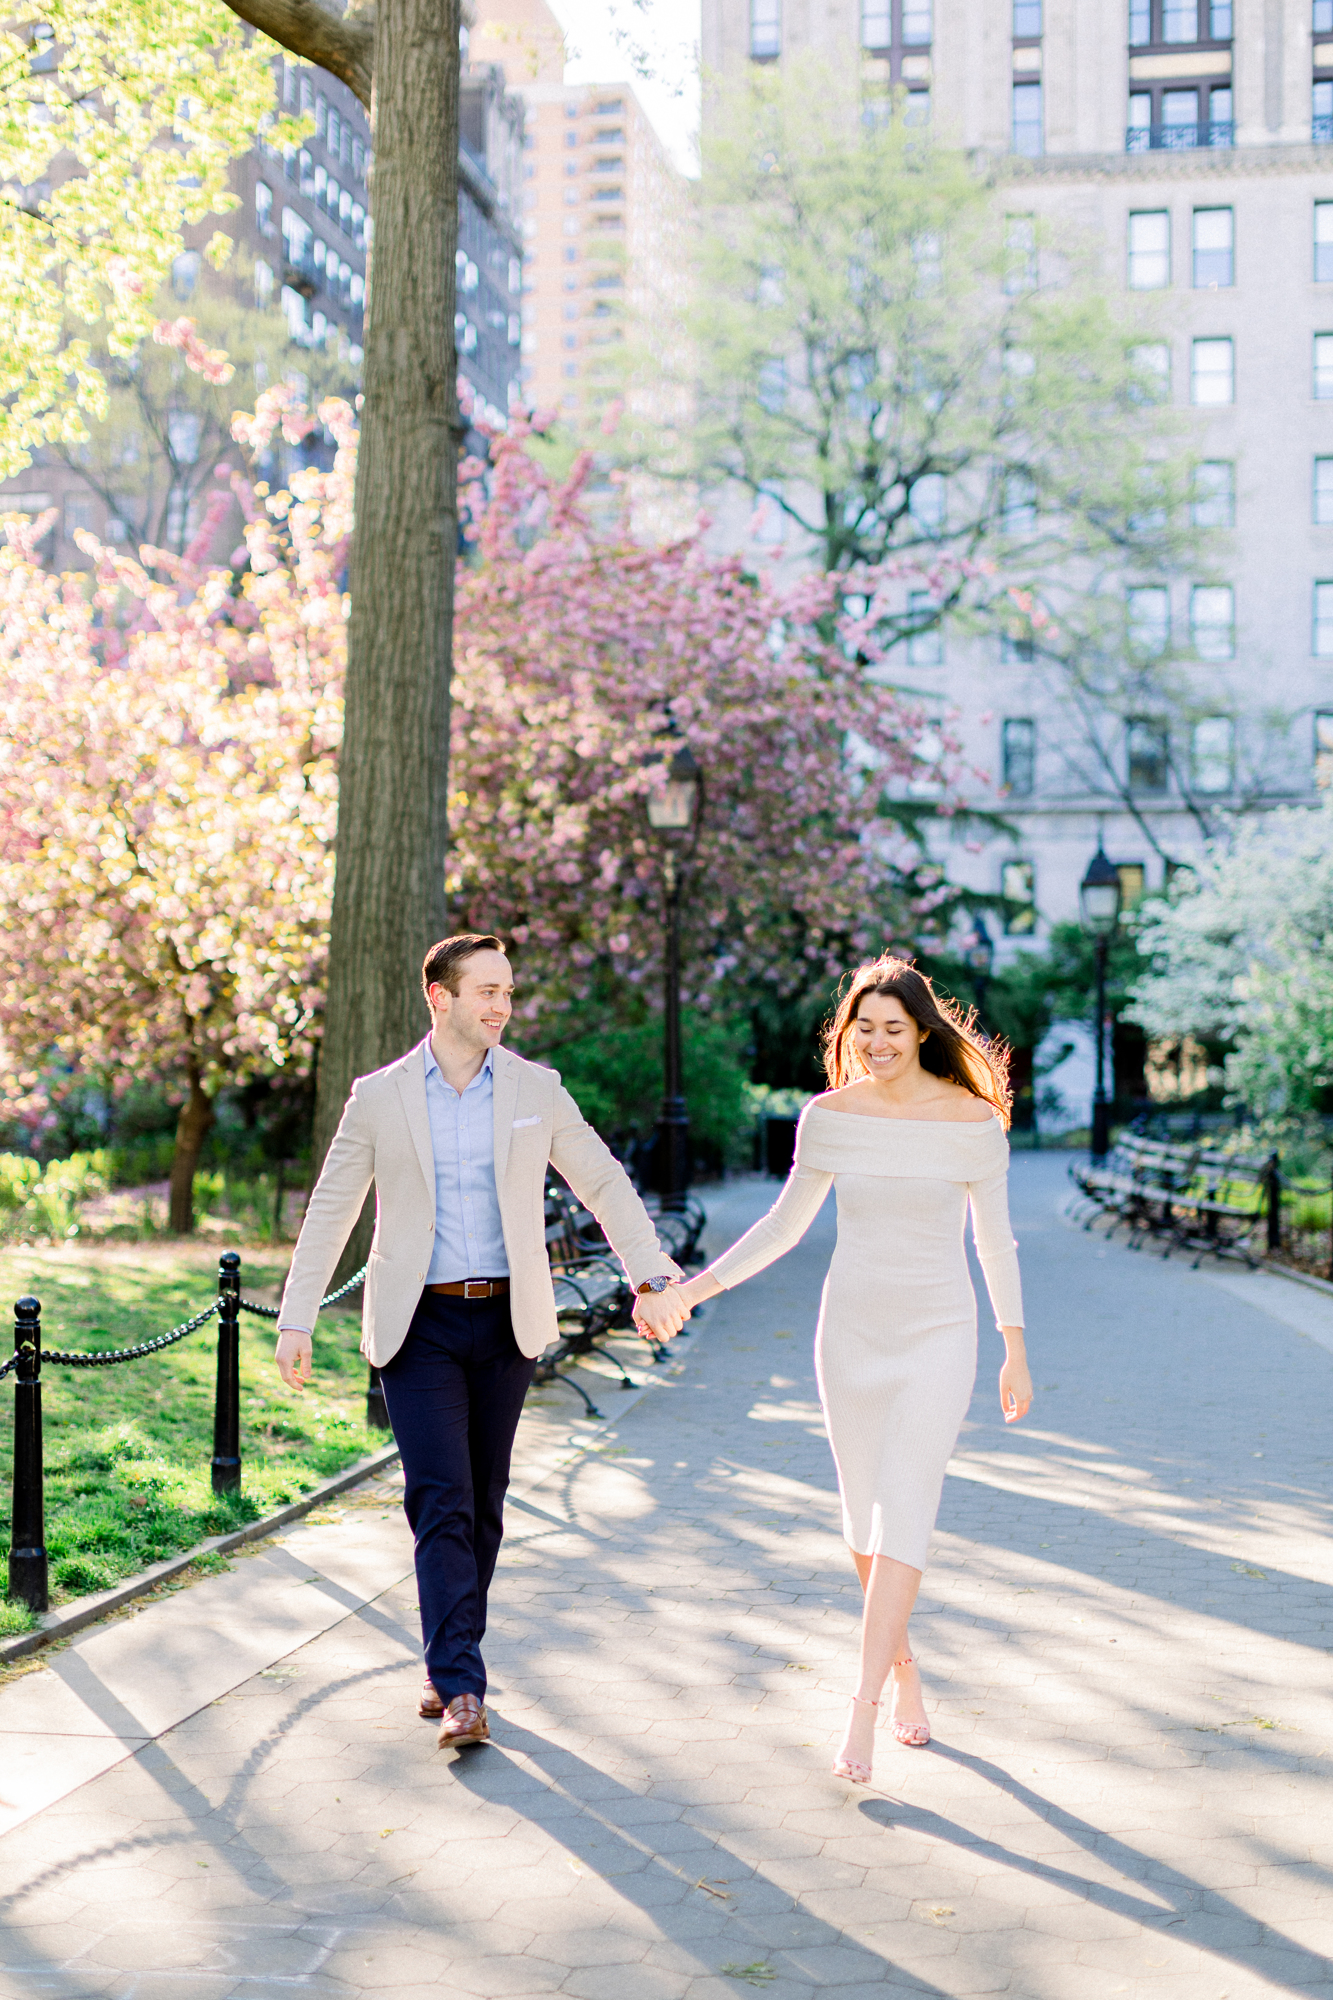 Radiant Spring Engagement Photos in Washington Square Park NYC